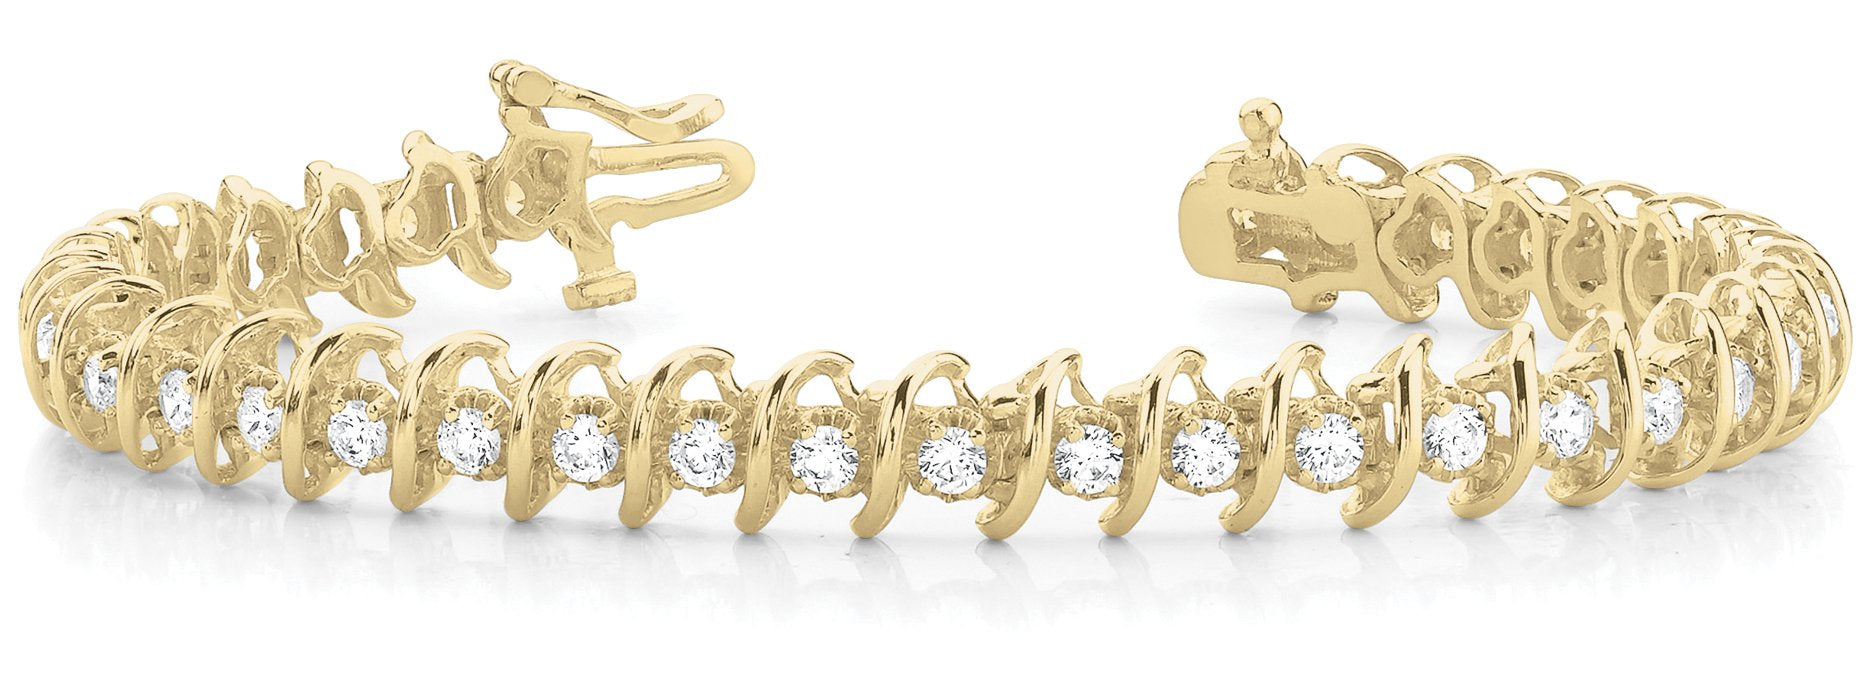 Fancy Diamond Bracelet Ladies 1.91ct tw - 14kt Yellow Gold